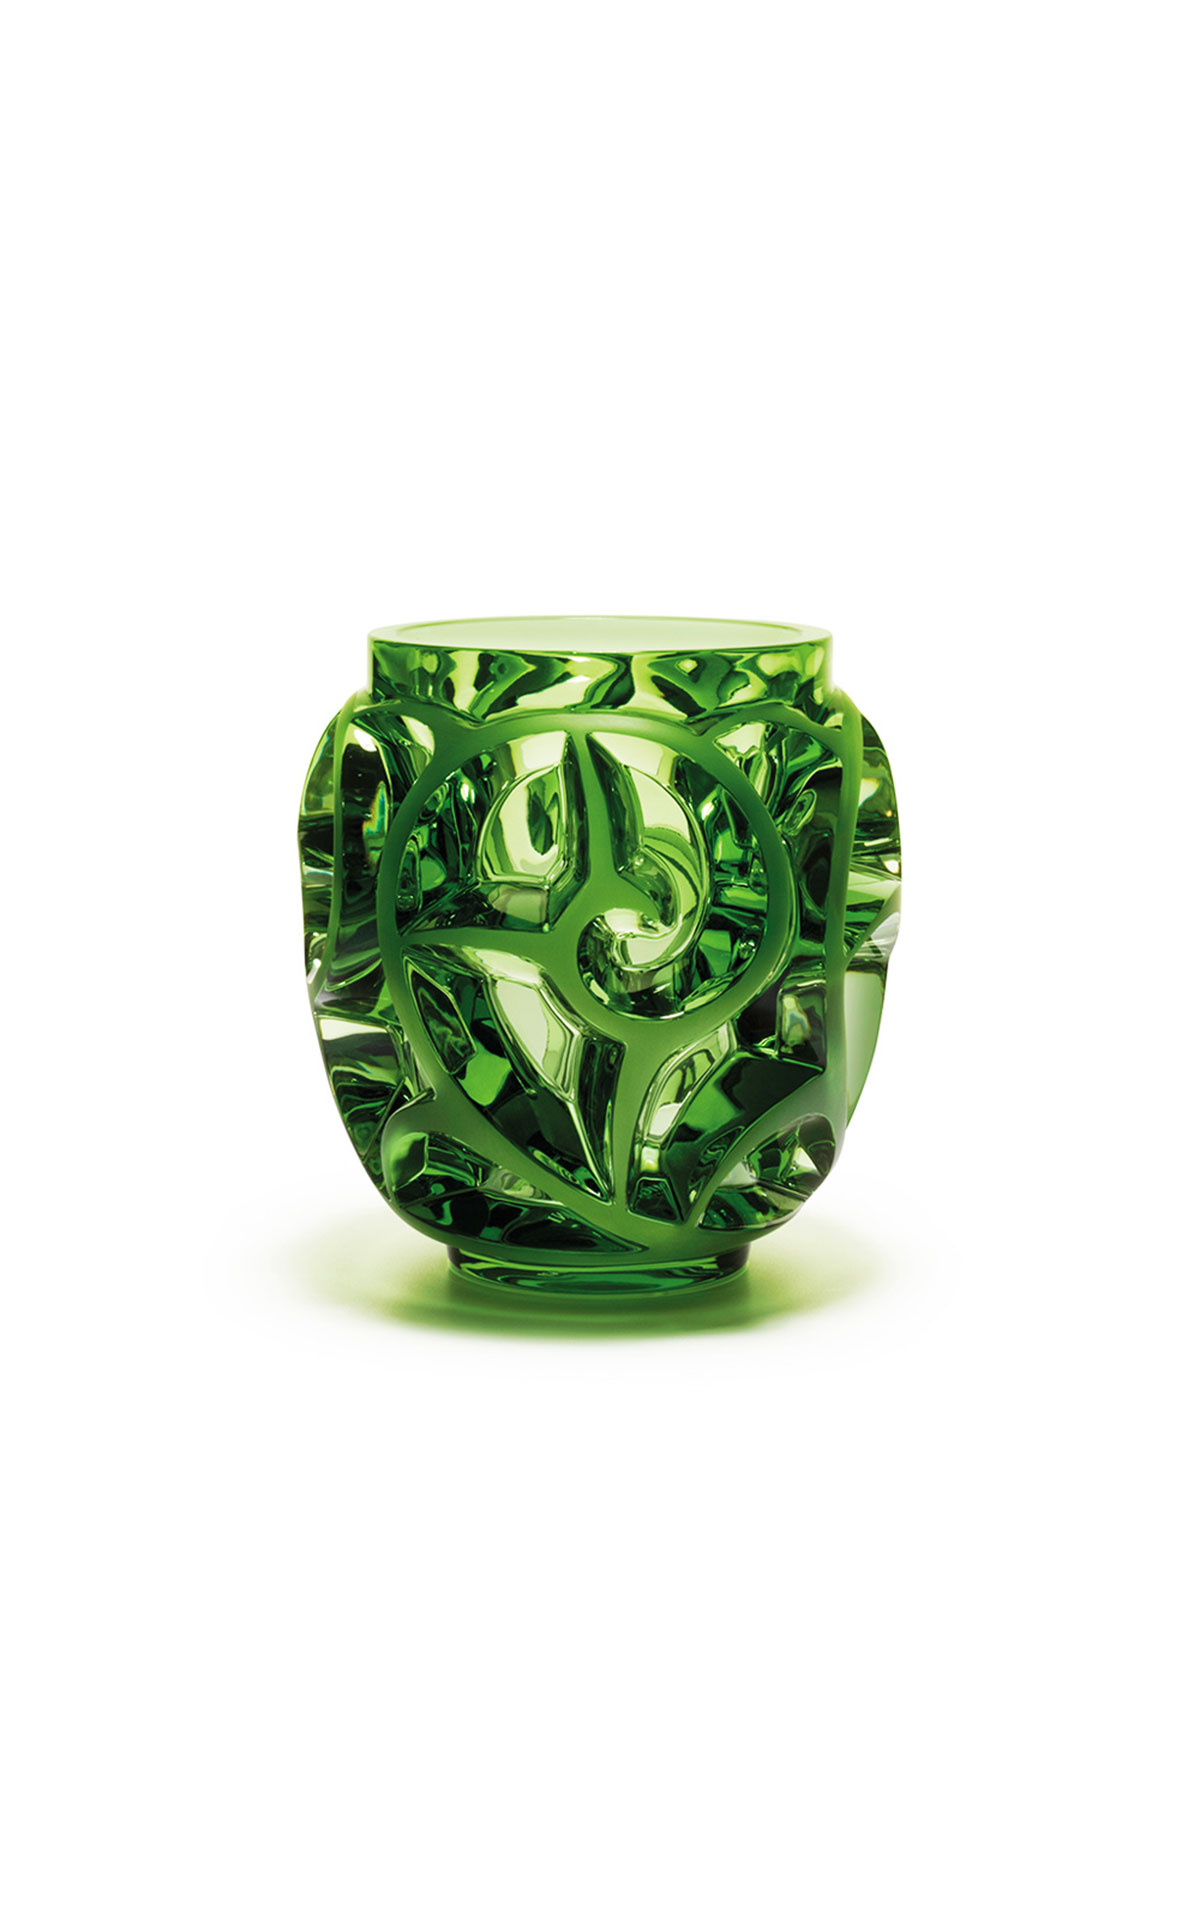 Lalique Vase tourbillons vert clair999 from Bicester Village